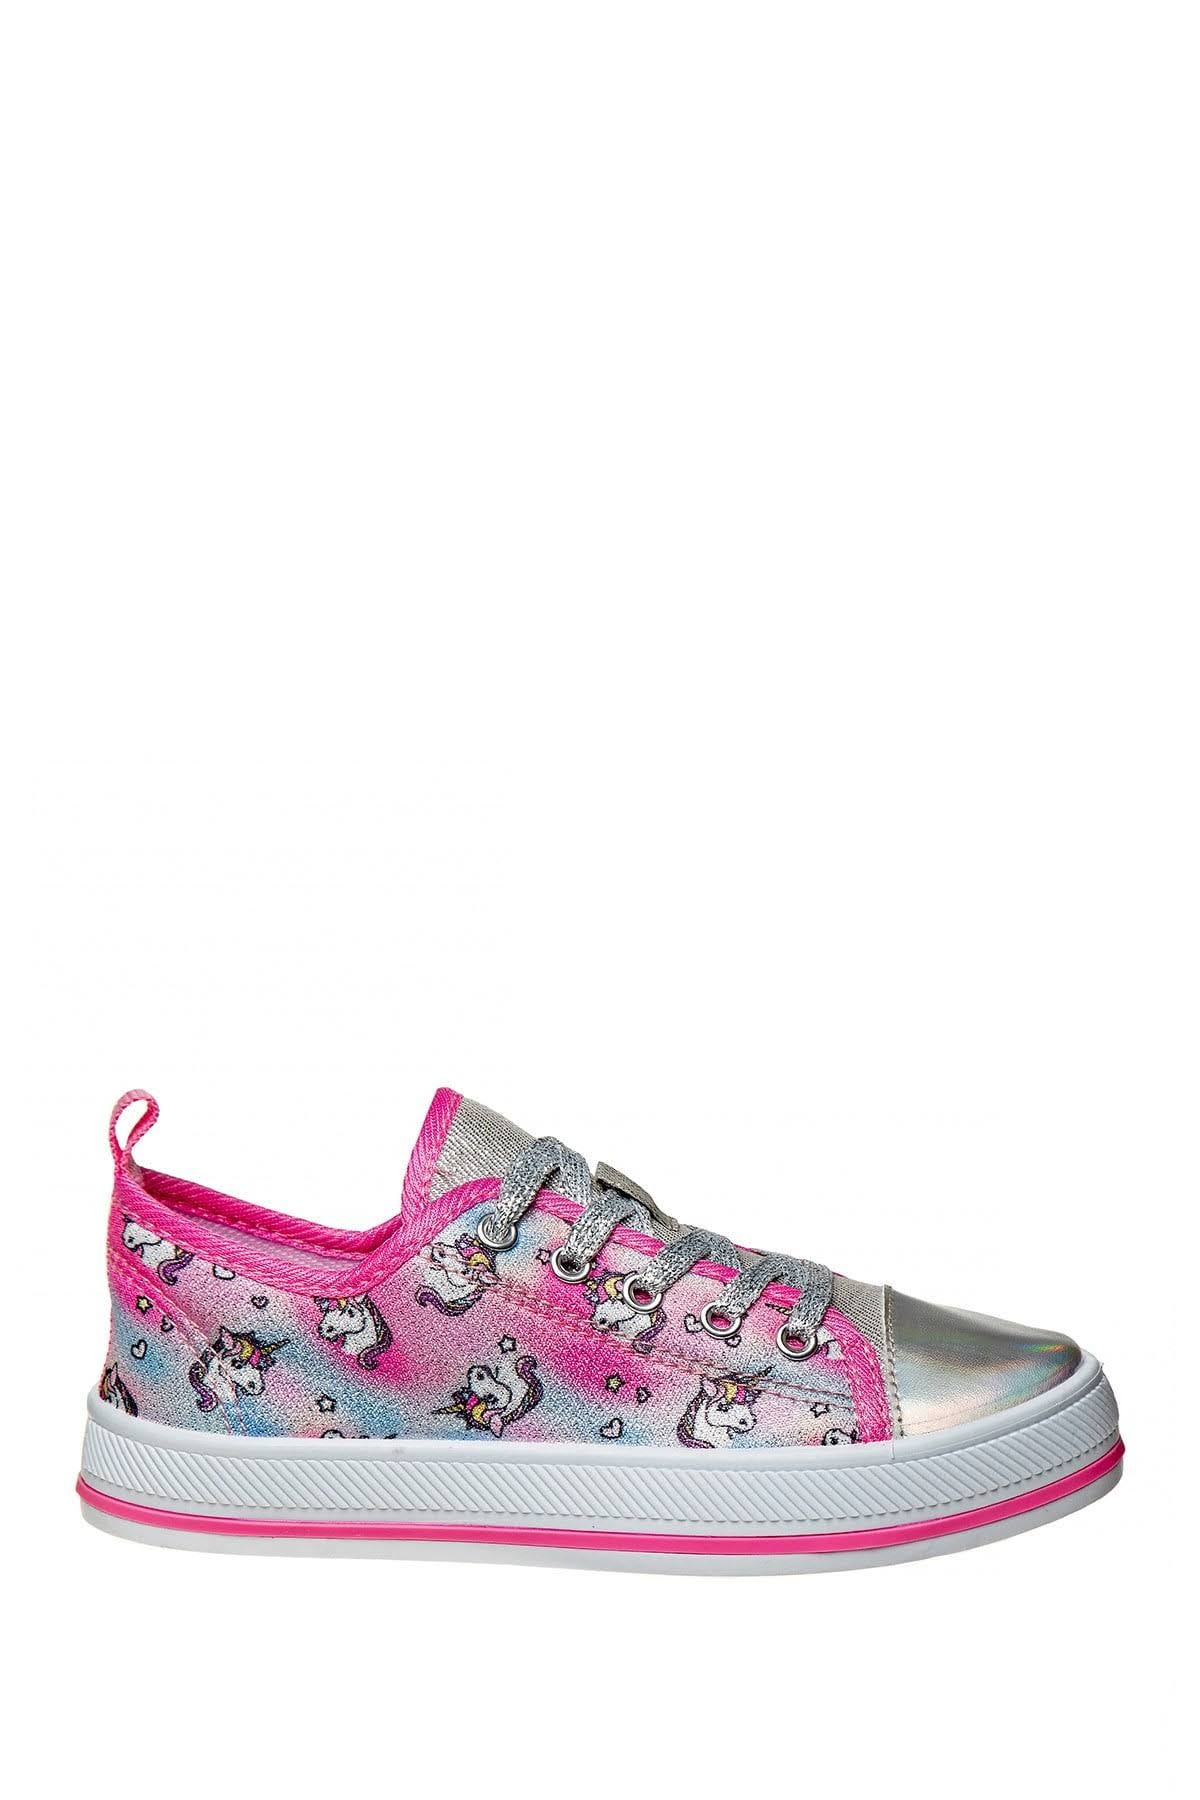 Josmo Metallic Unicorn Shoes - Pink/Silver Canvas Sneakers | Image